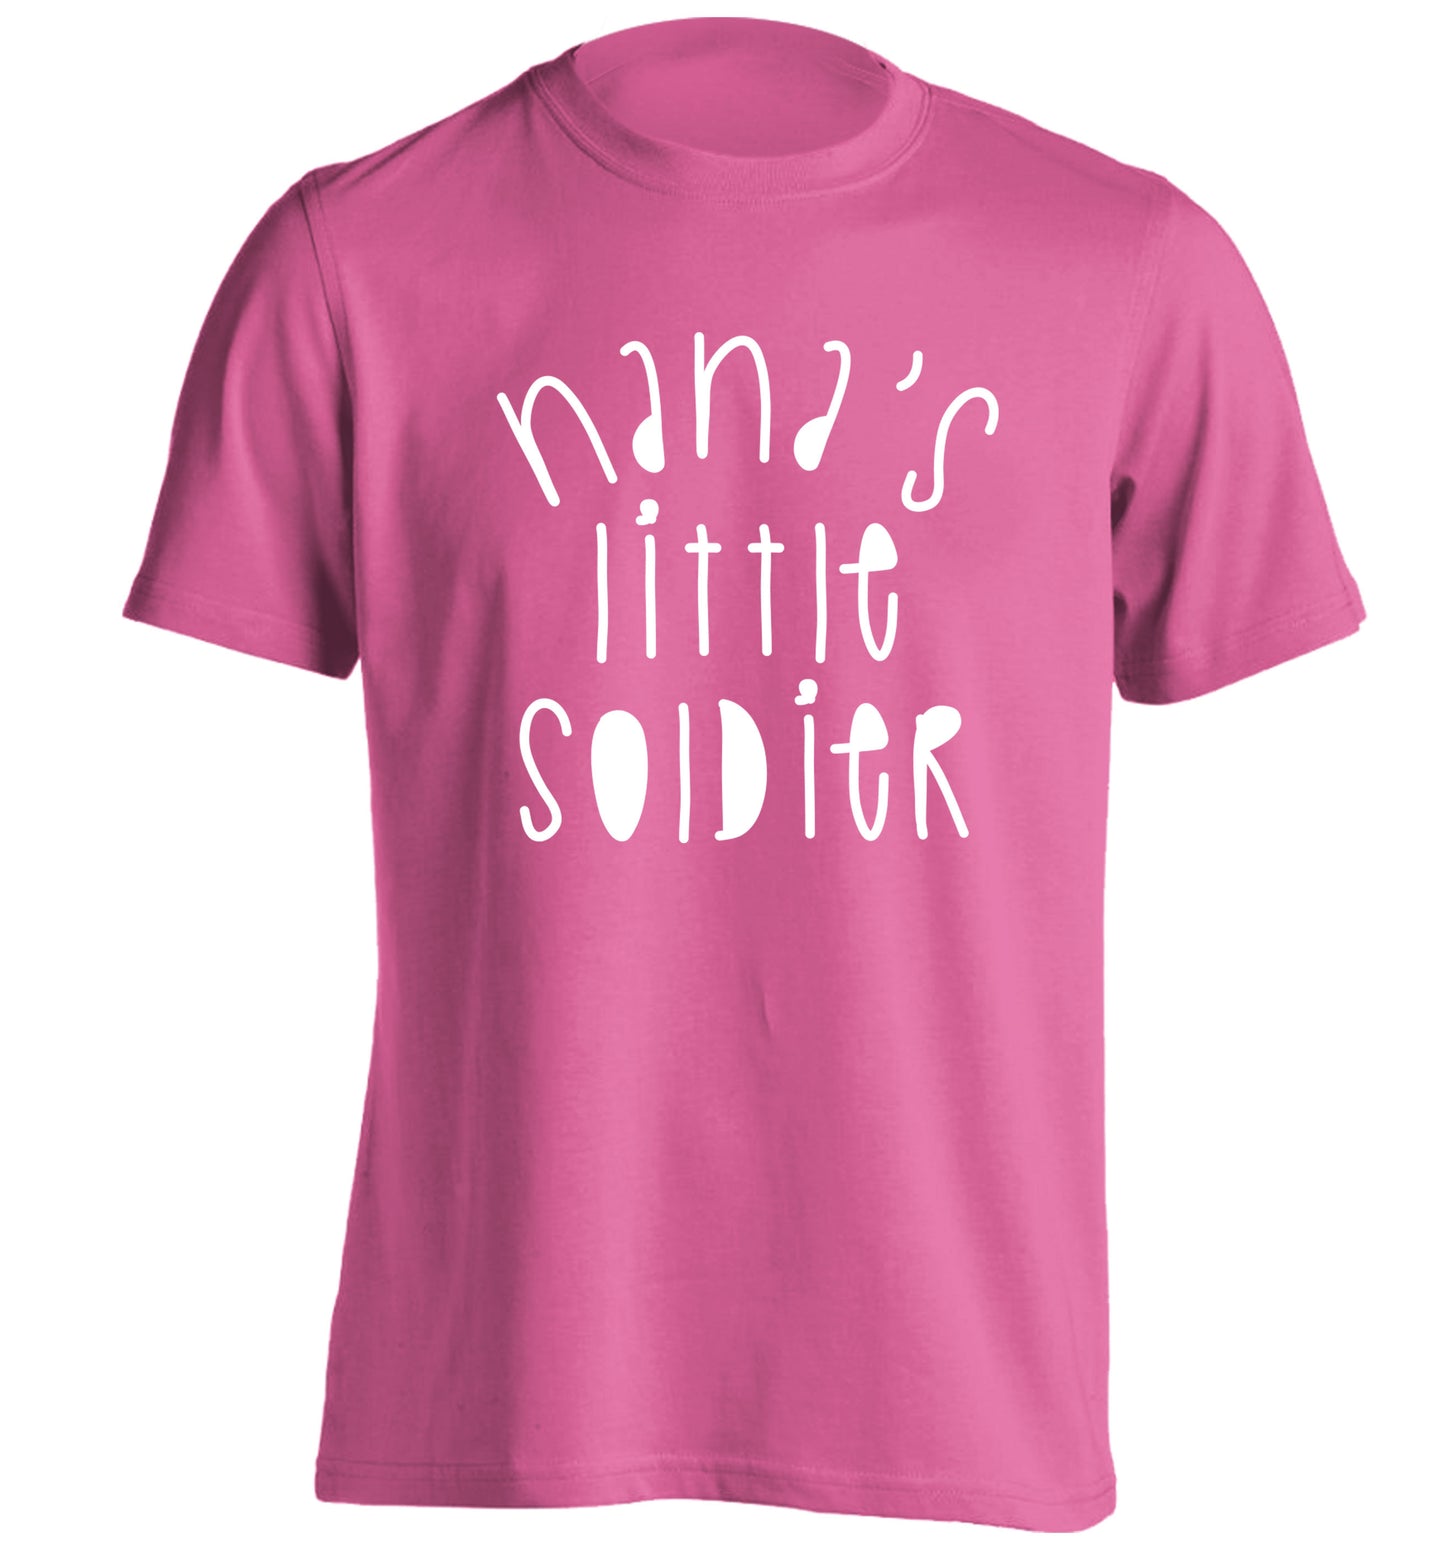 Nana's little soldier adults unisex pink Tshirt 2XL